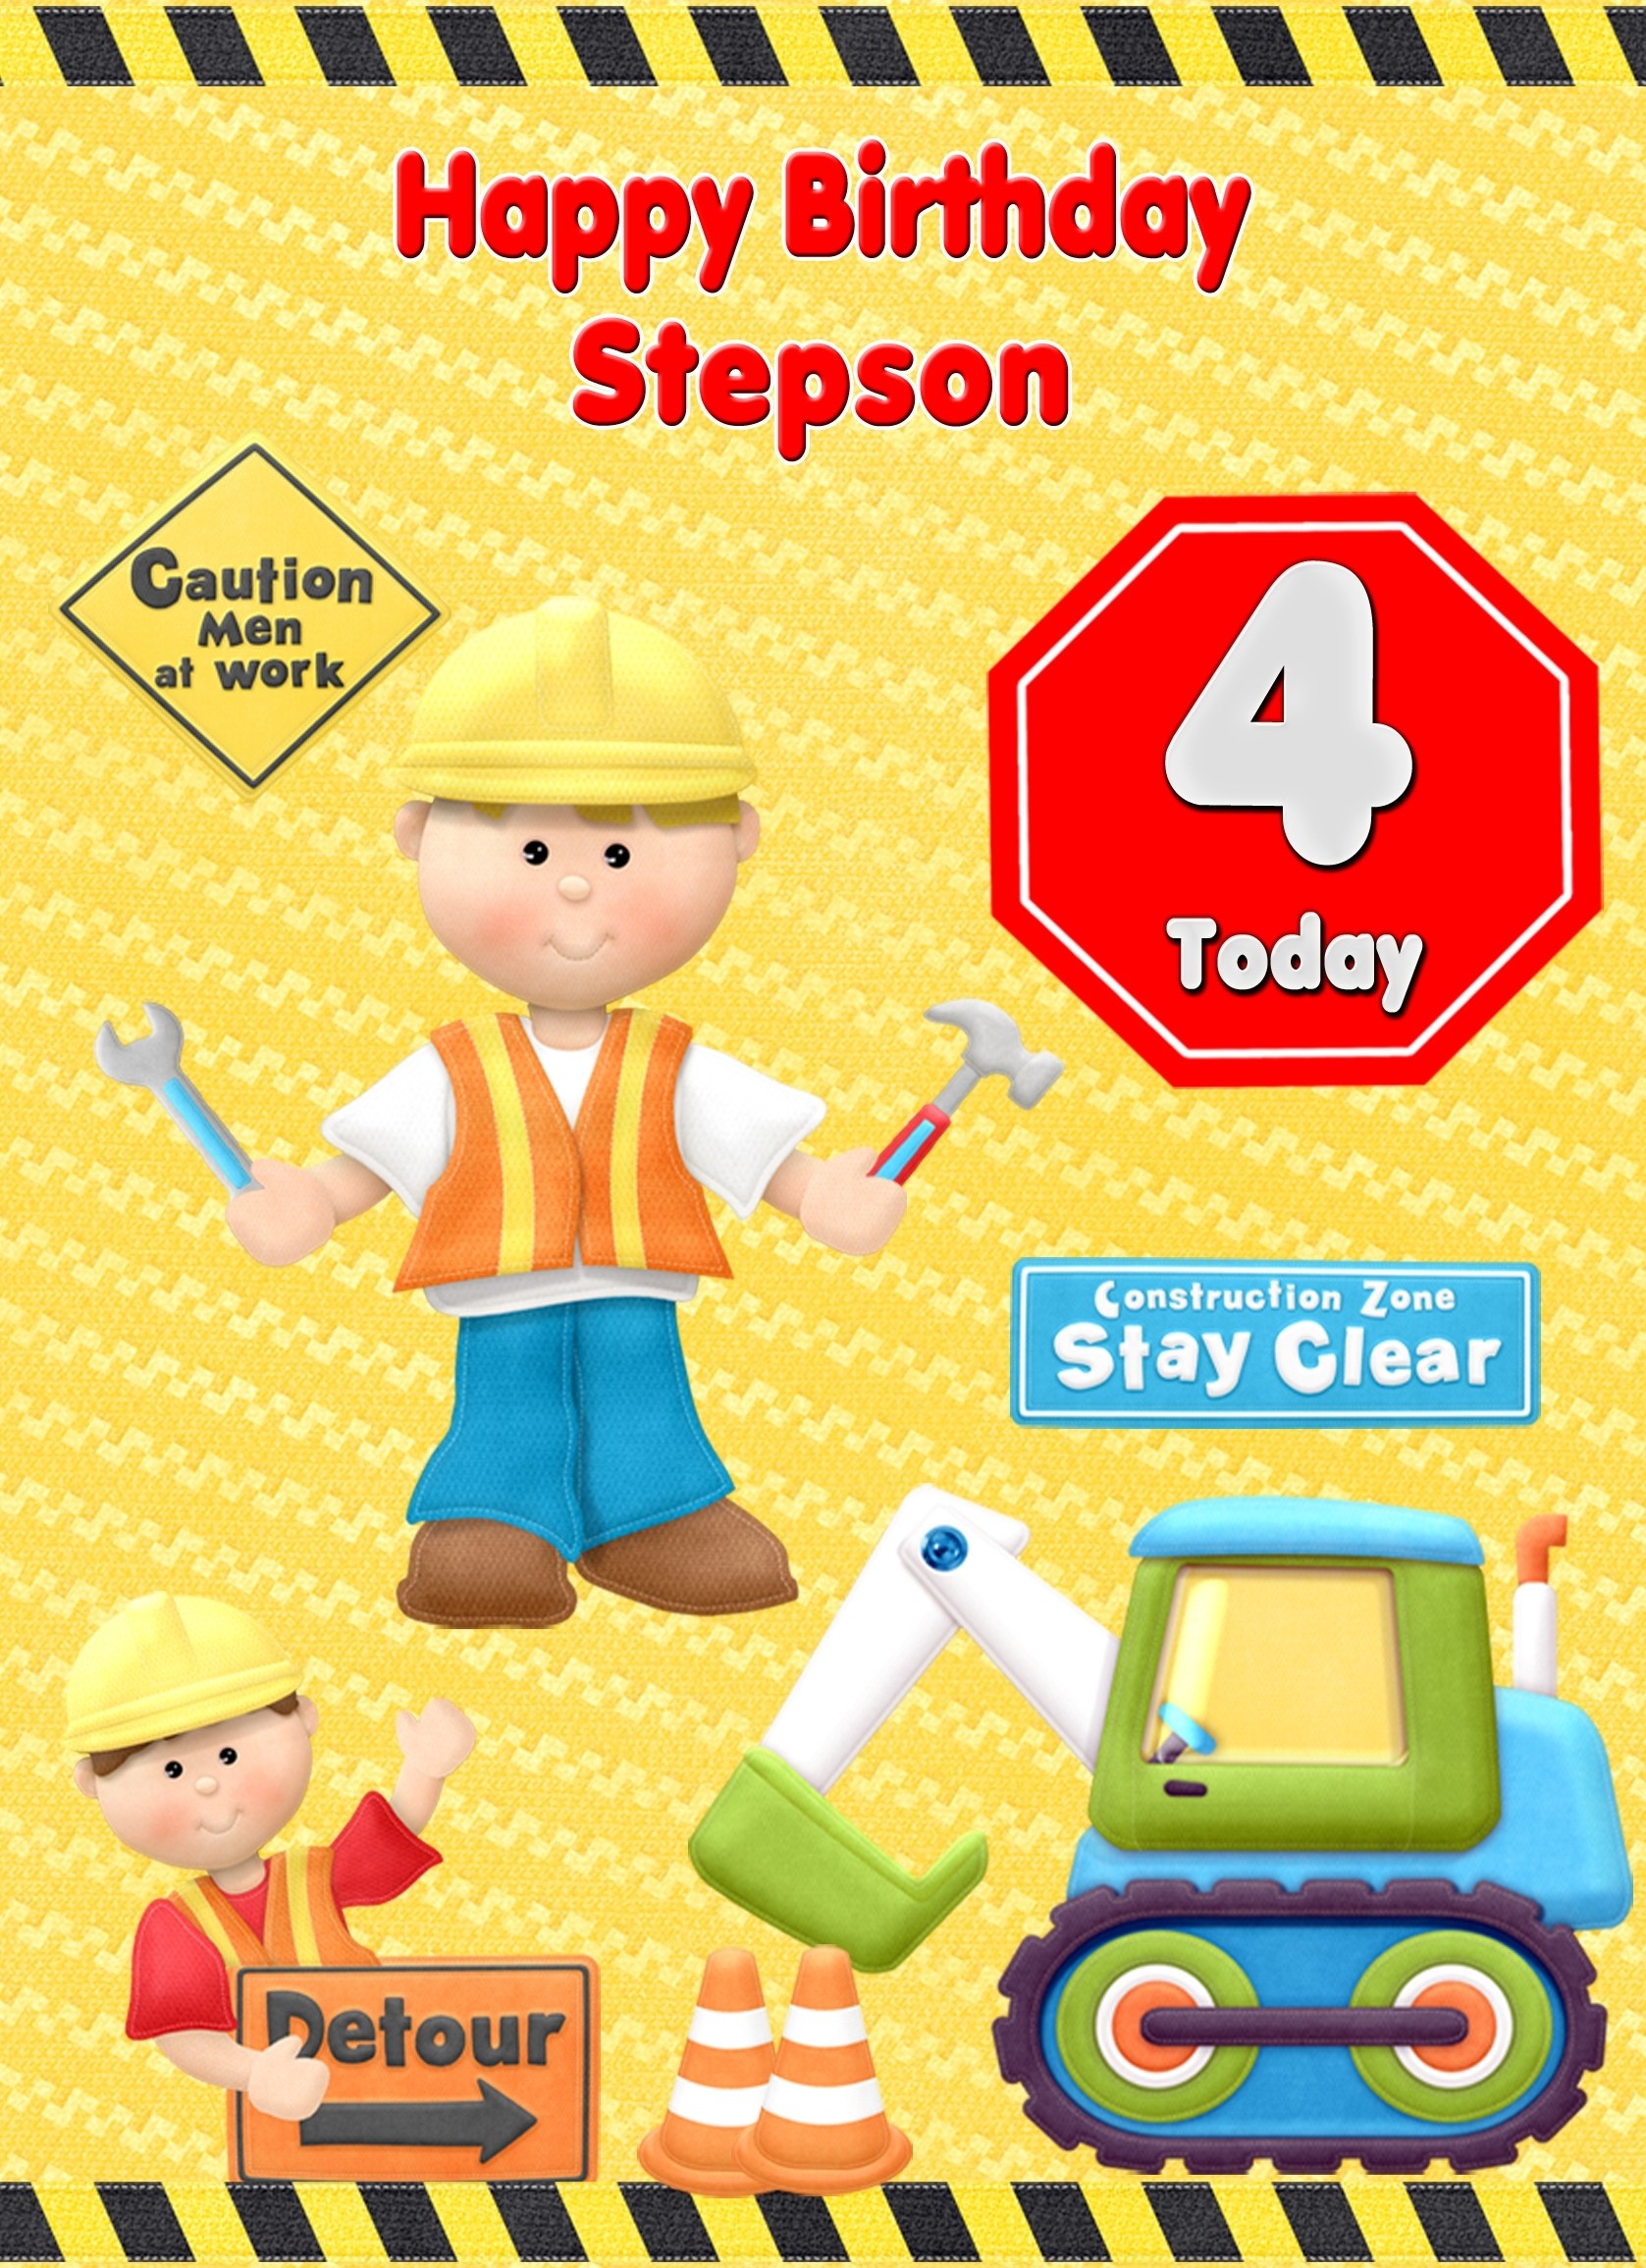 Kids 4th Birthday Builder Cartoon Card for Stepson